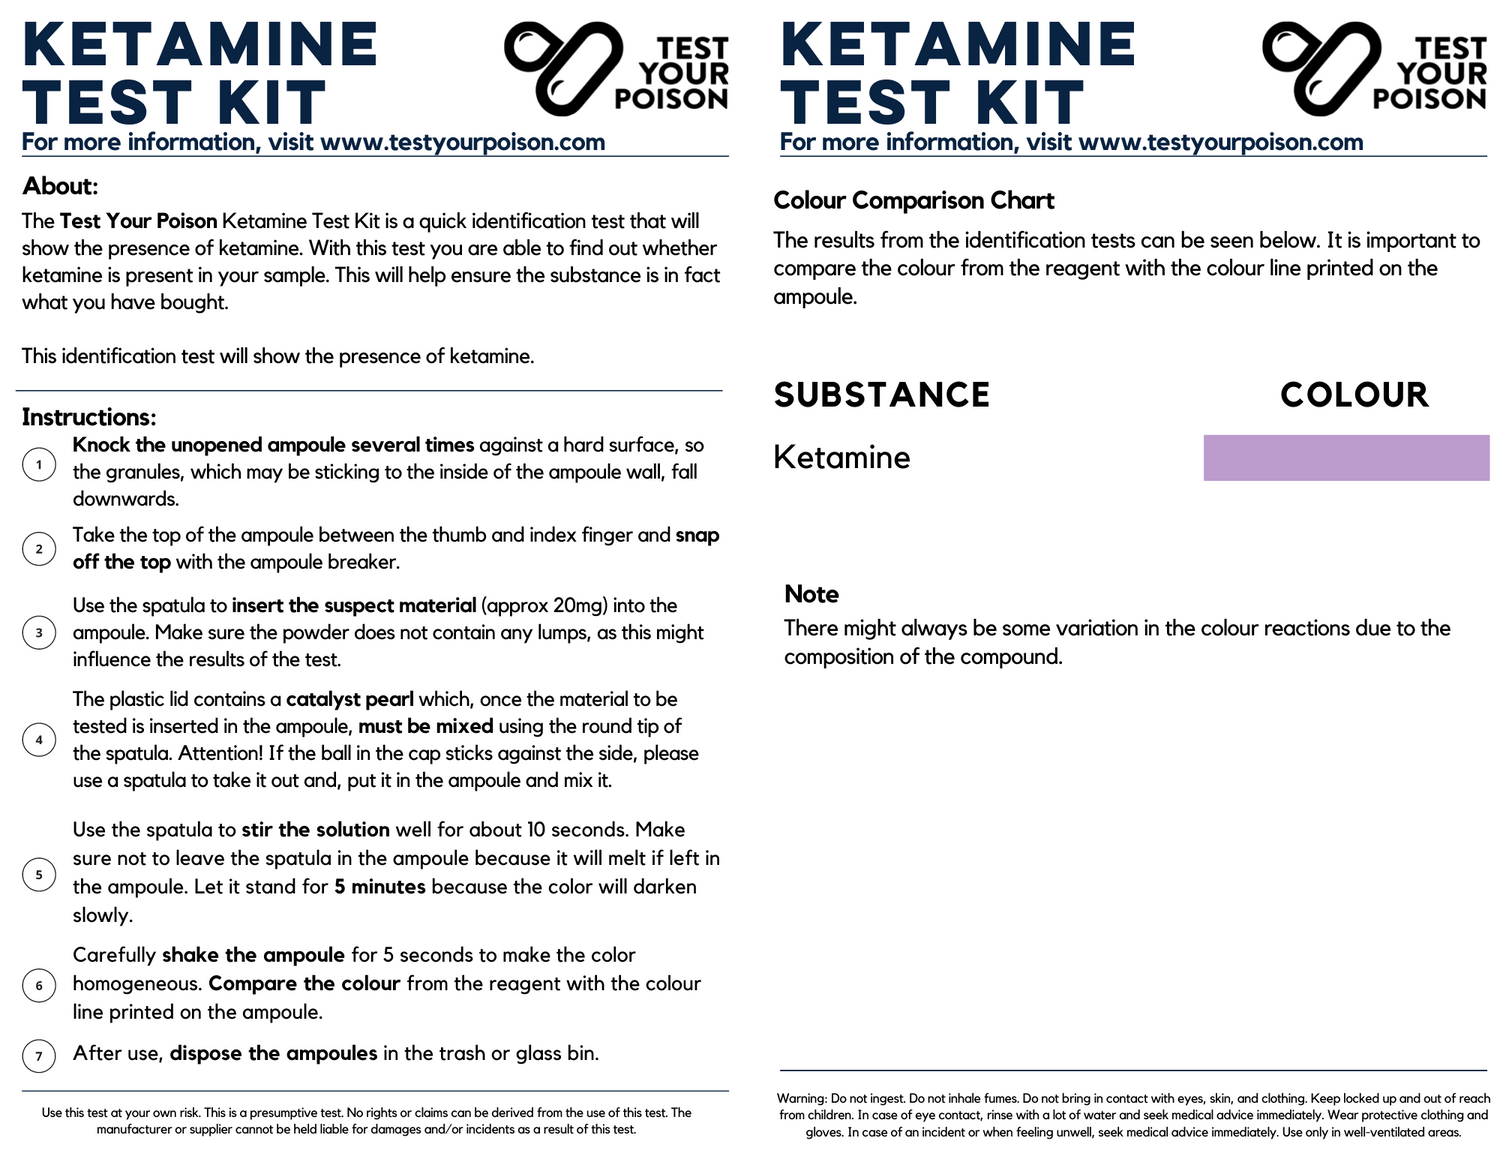 Ketamine Test Kit Instructions